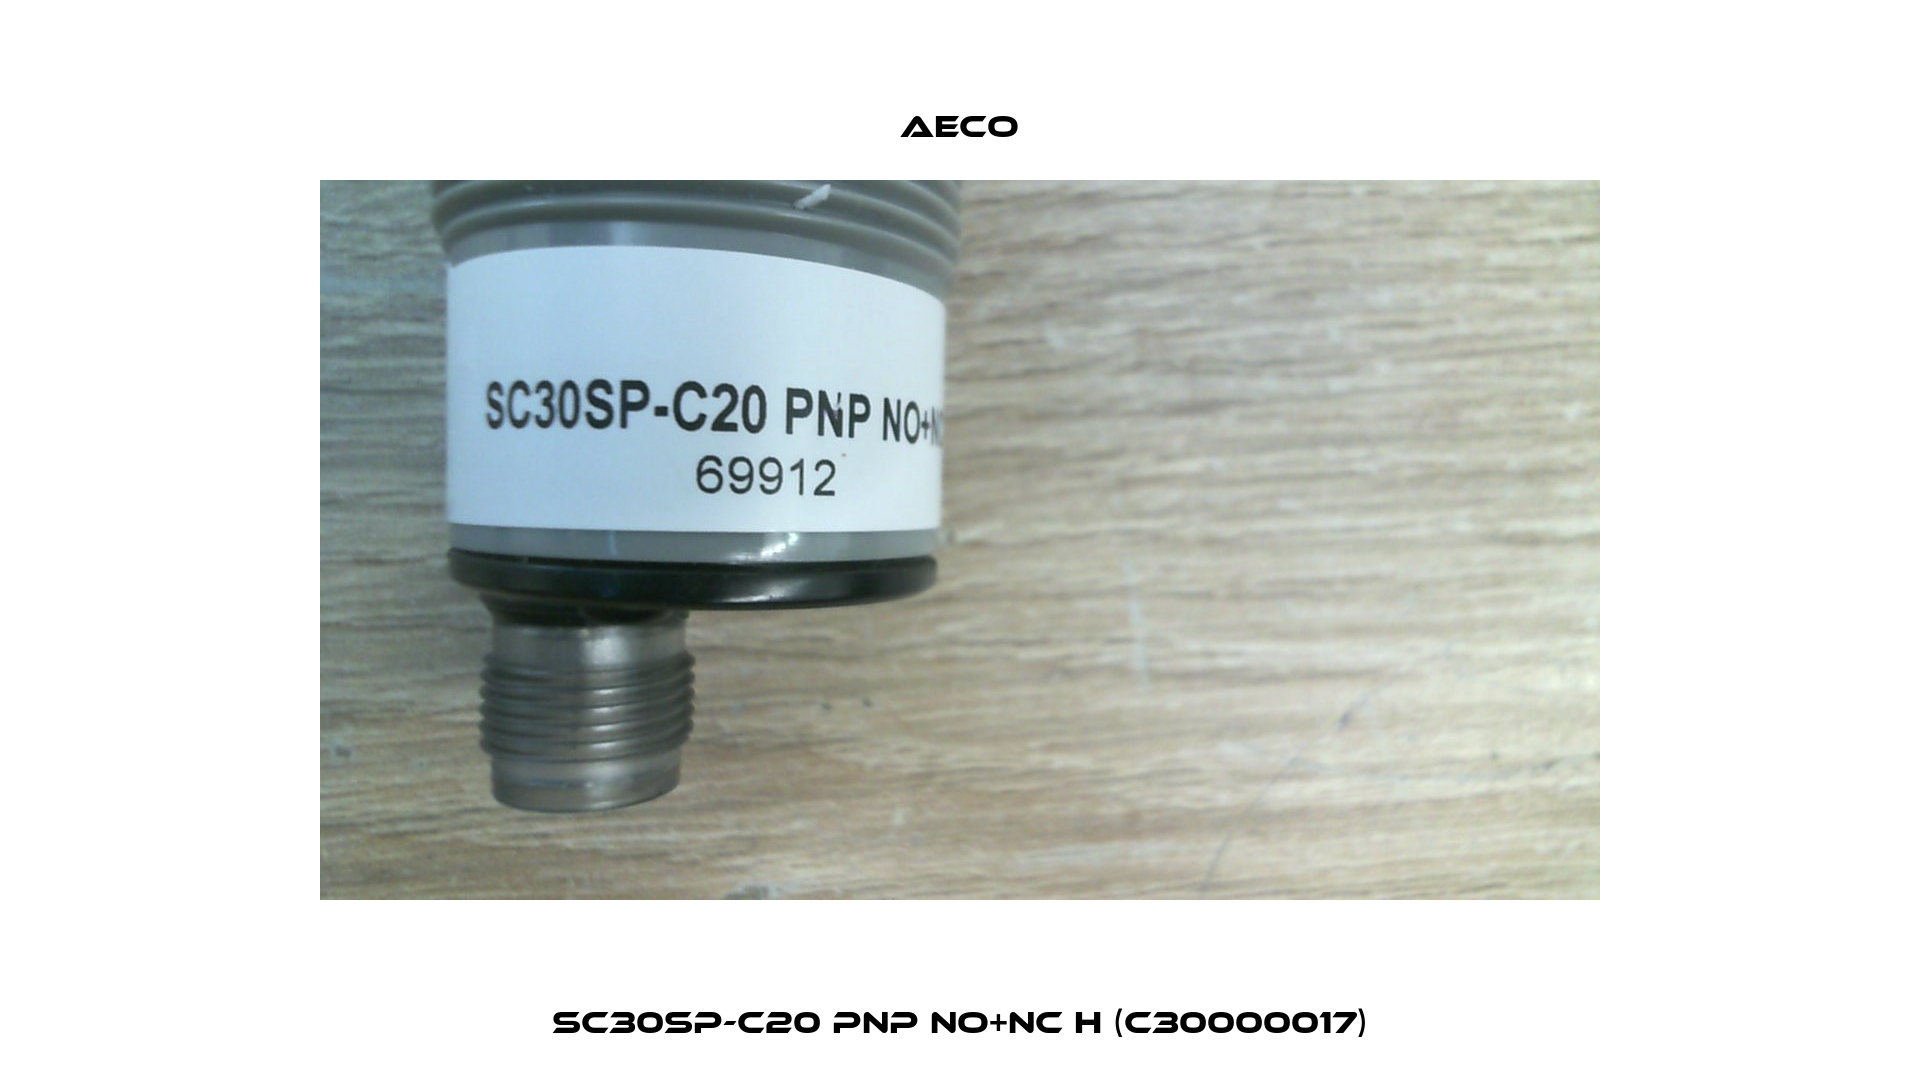 SC30SP-C20 PNP NO+NC H (C30000017) Aeco